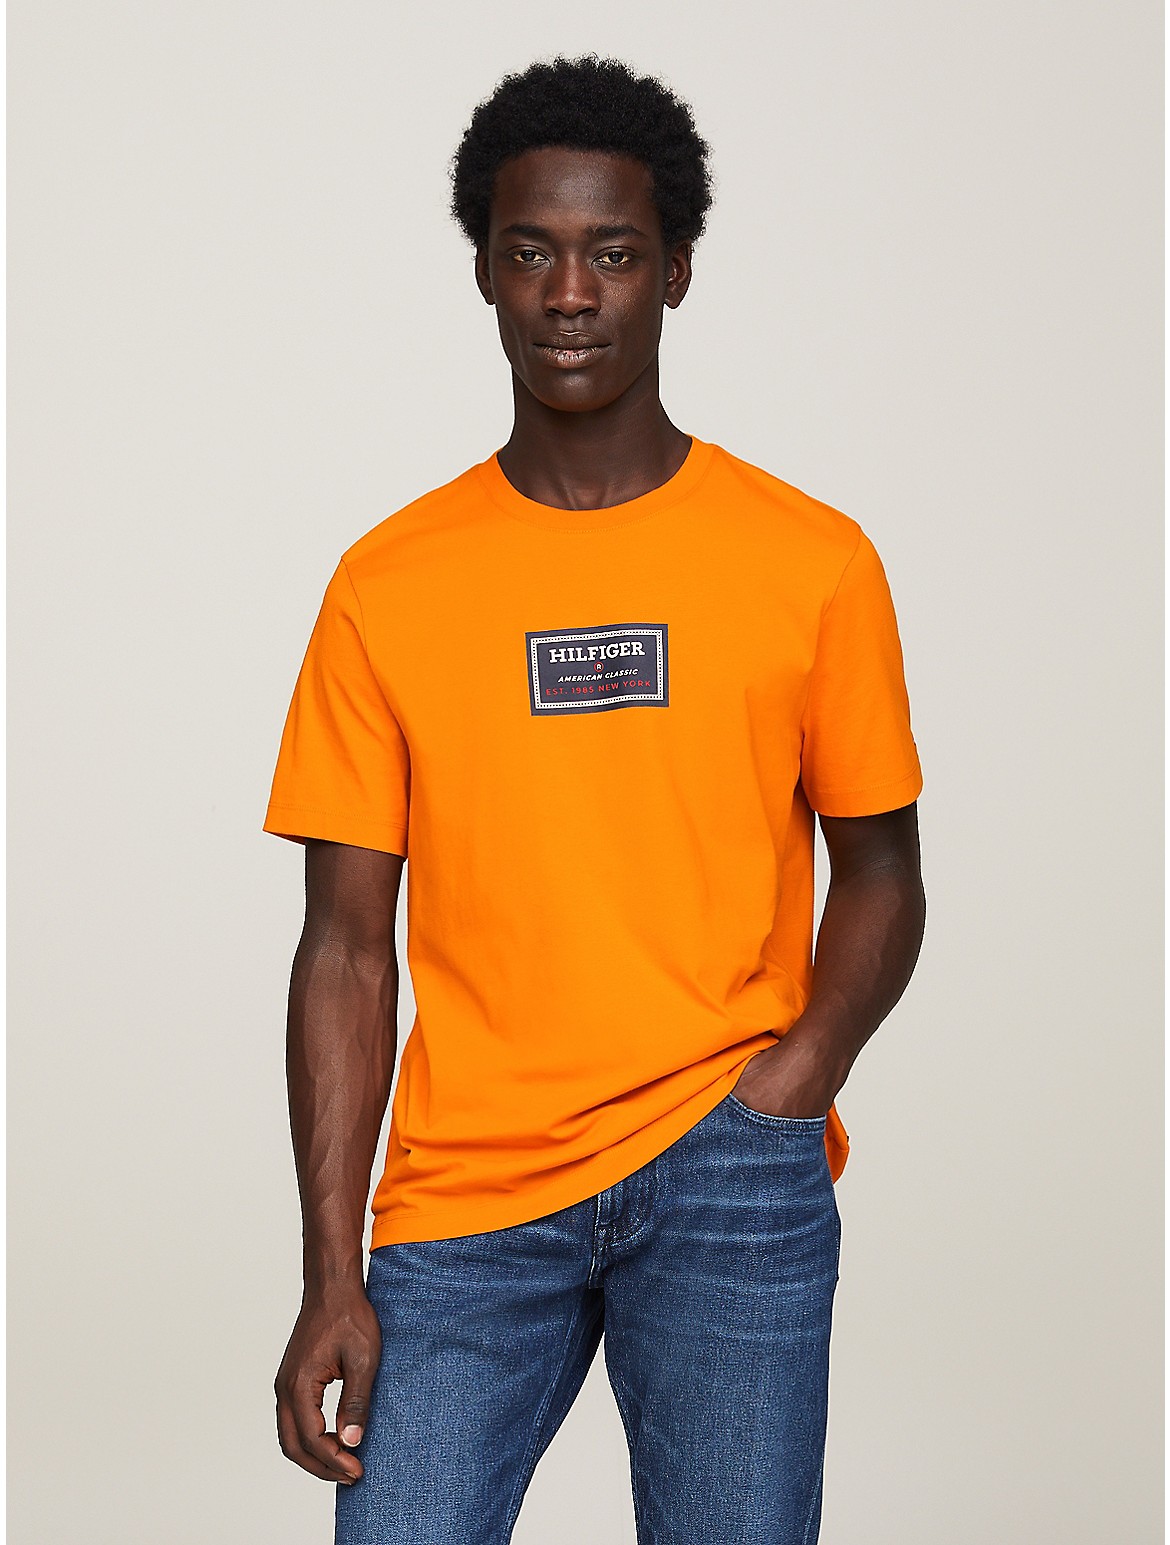 Tommy Hilfiger Men's Hilfiger Label Graphic T-Shirt